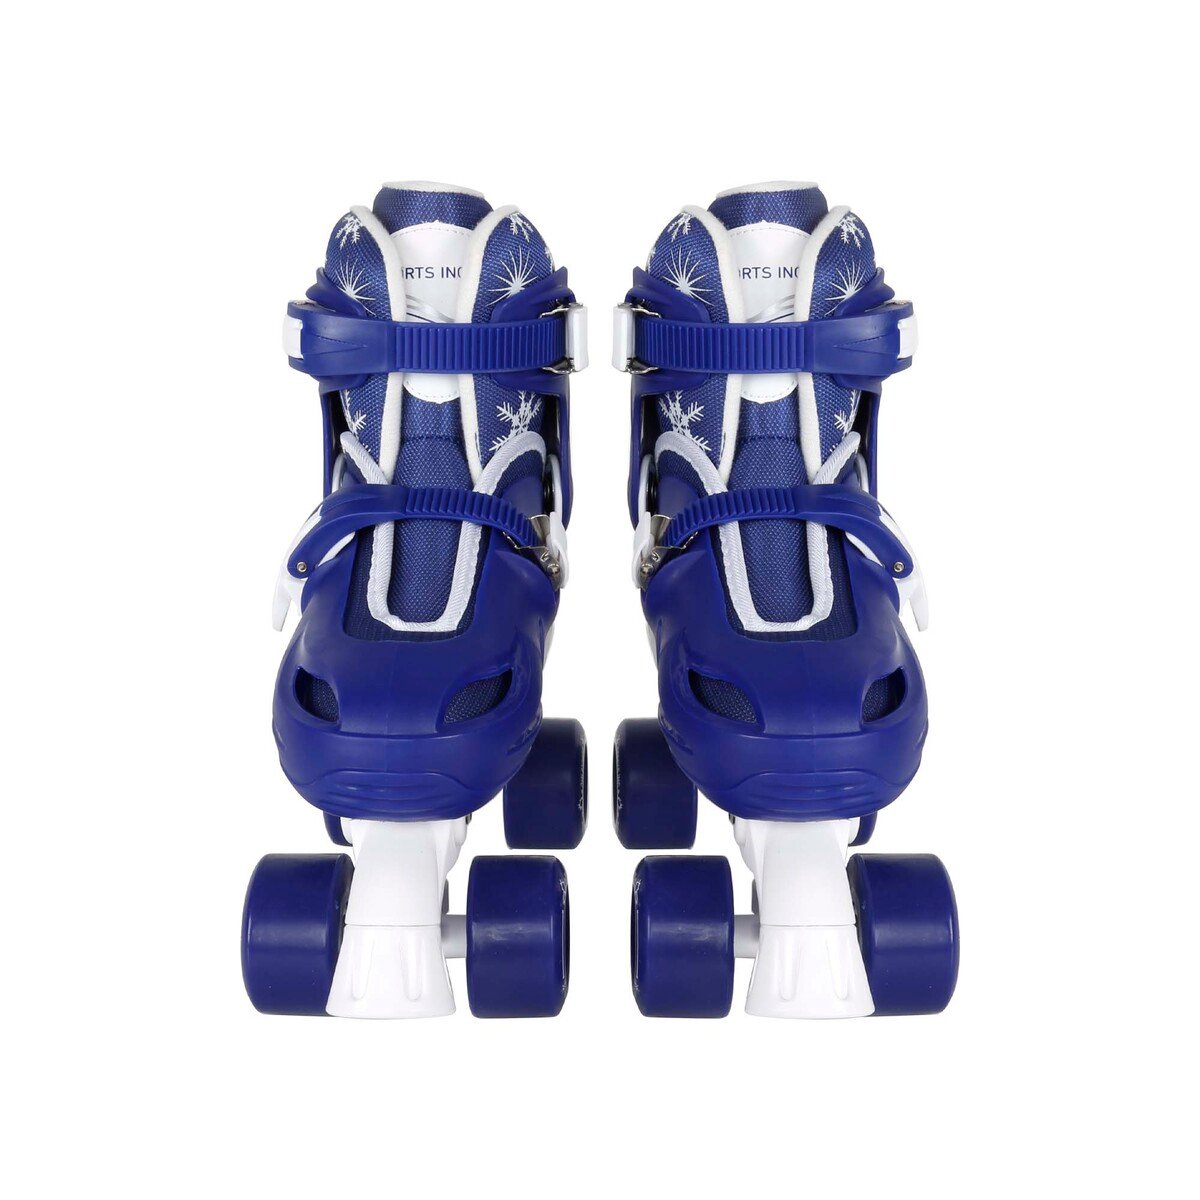 Sports Inc Skating Shoe, TE-725, Medium, Blue